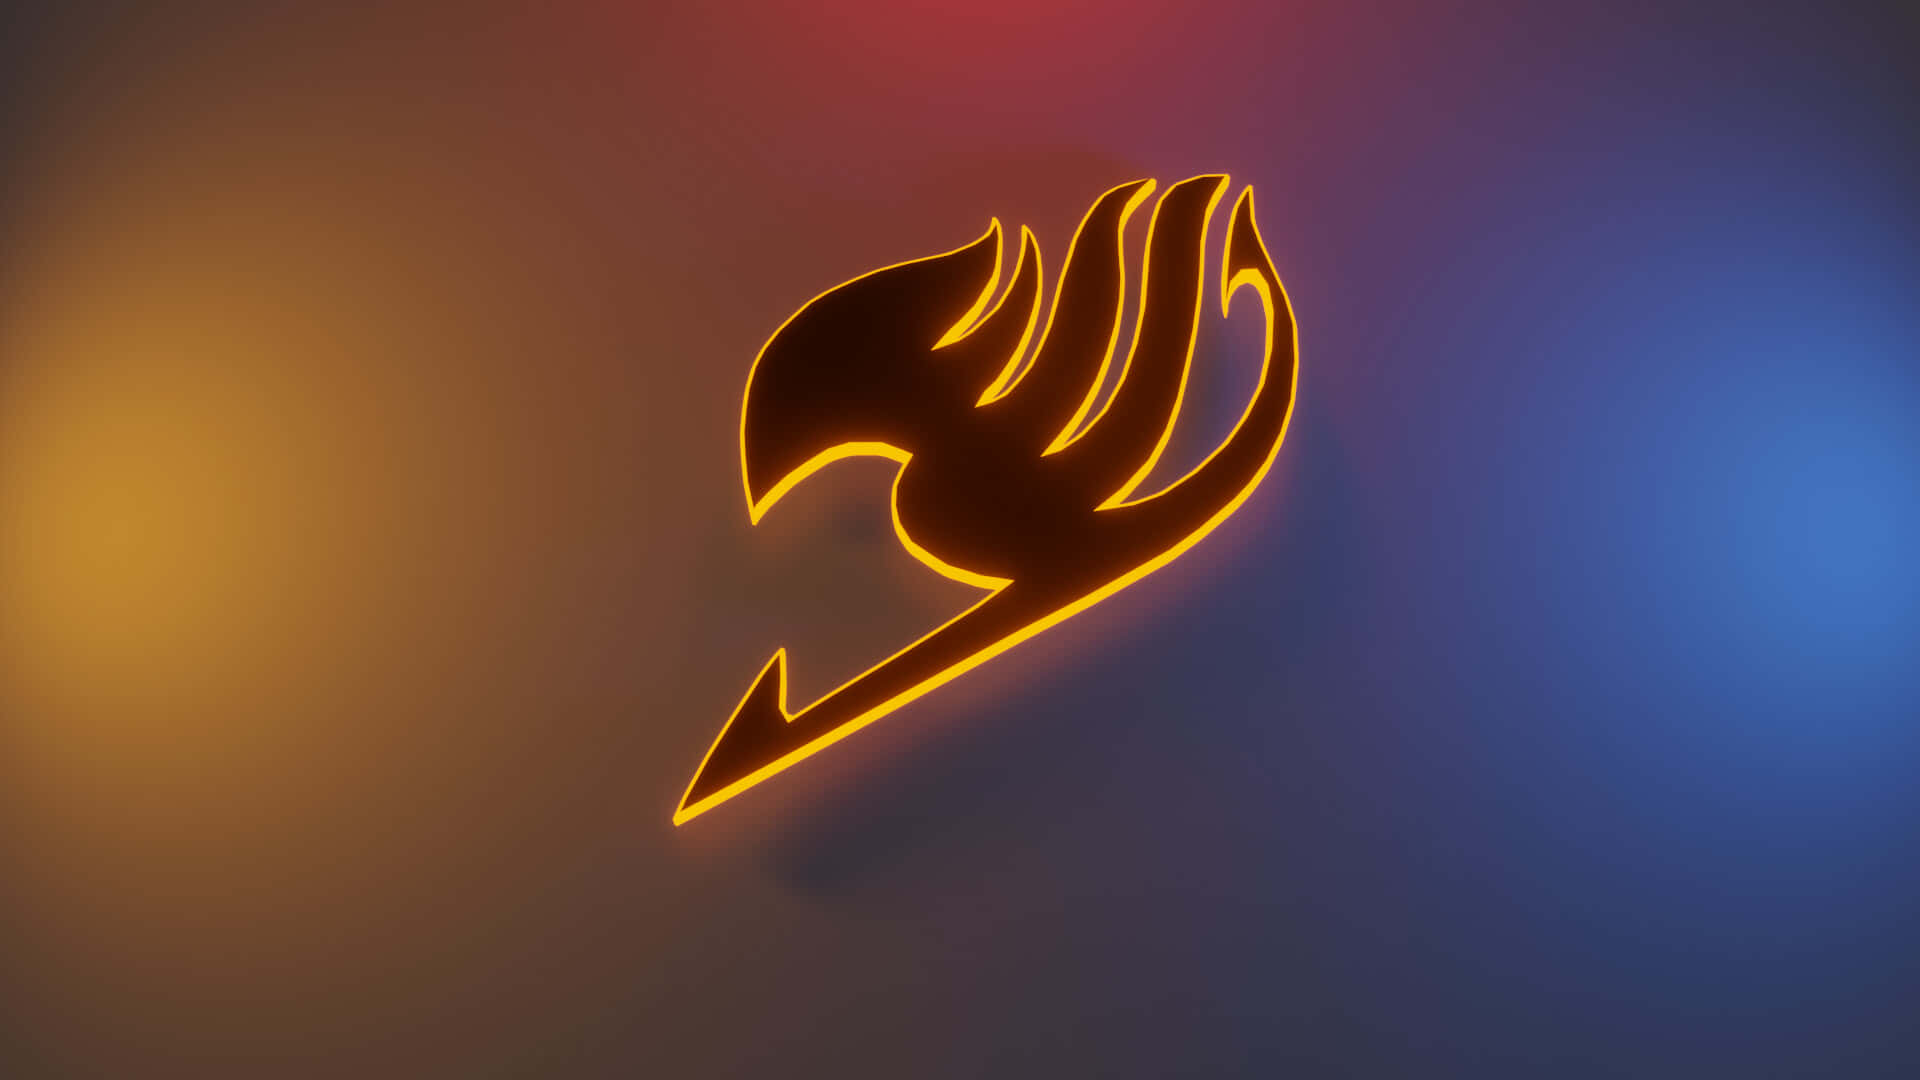 Bildpå Fairy Tail-logotypen. Wallpaper